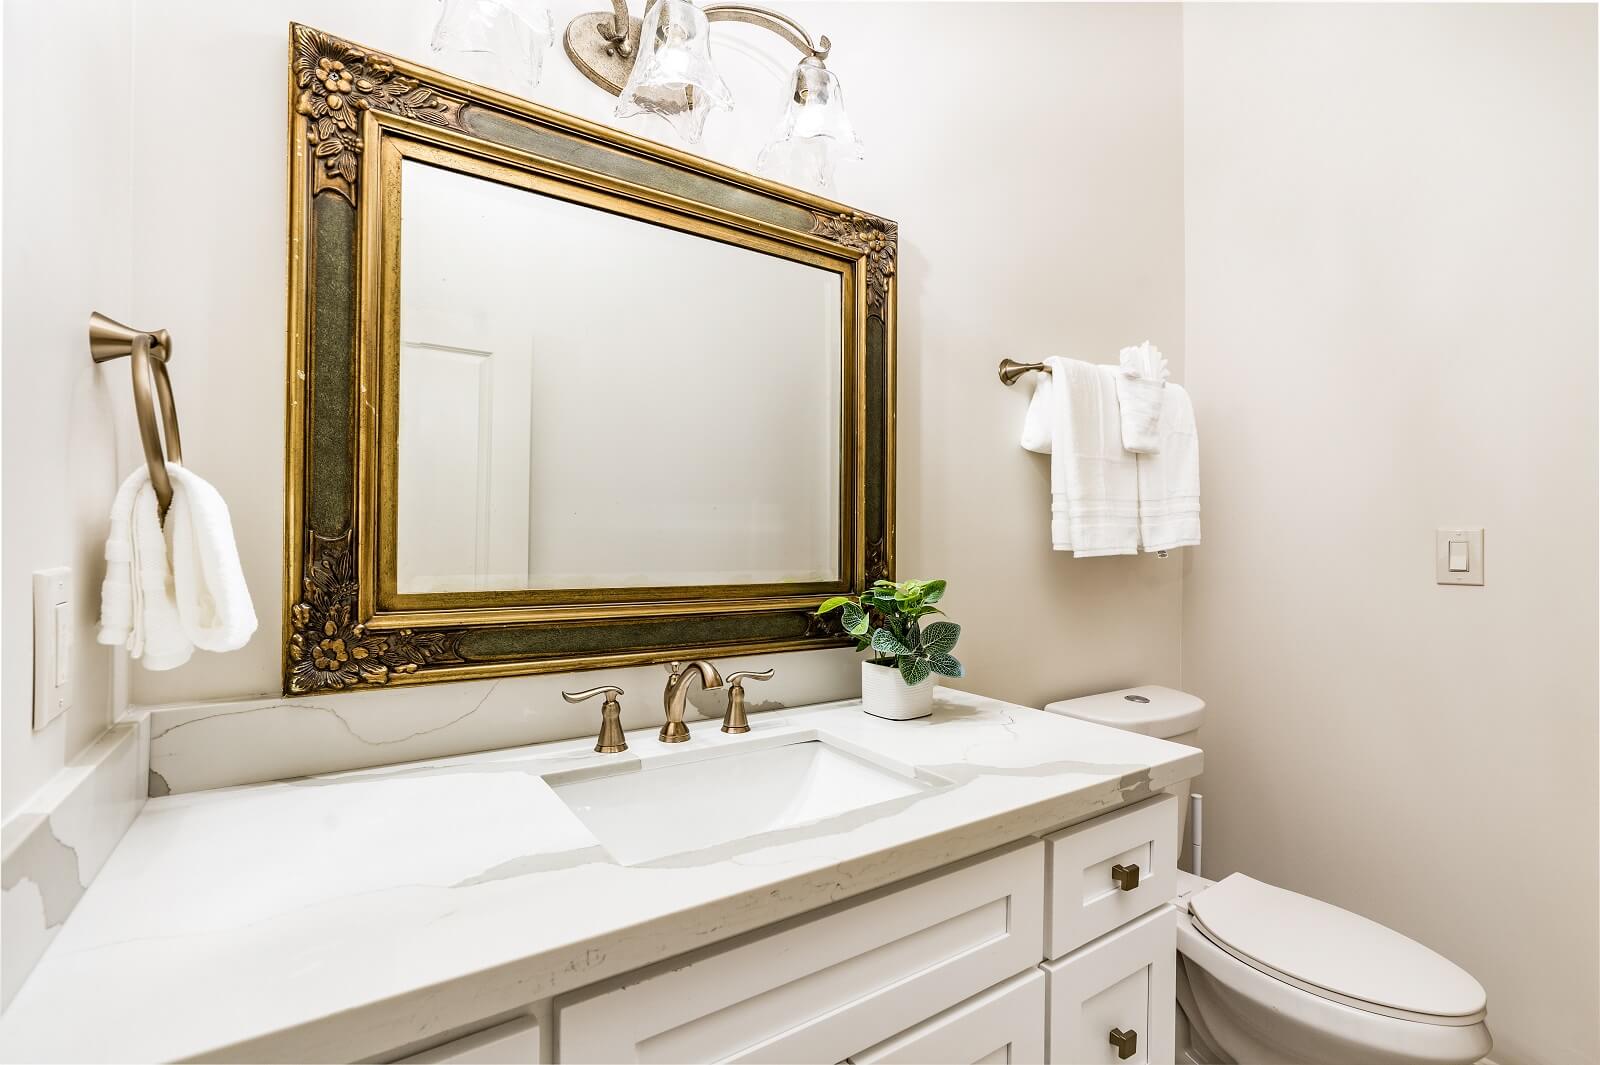 The Alexandre Unit 403 bathroom, a New Orleans luxury rental.